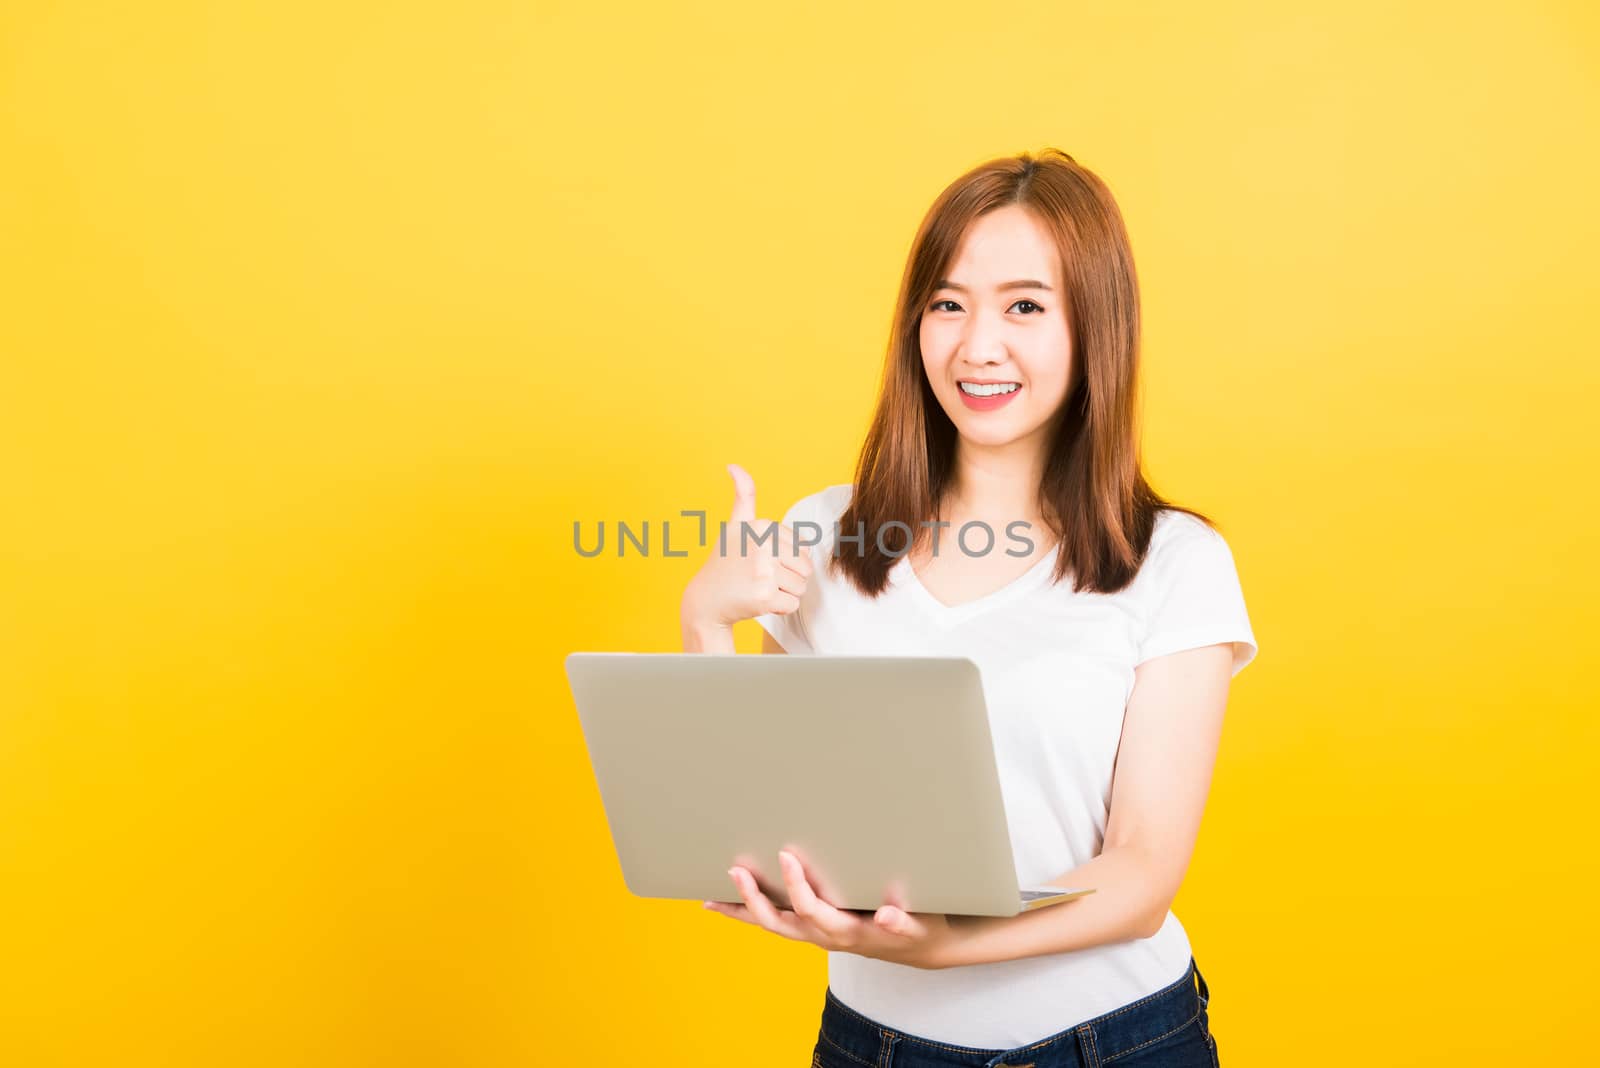 woman teen smiling standing wear t-shirt using laptop computer a by Sorapop